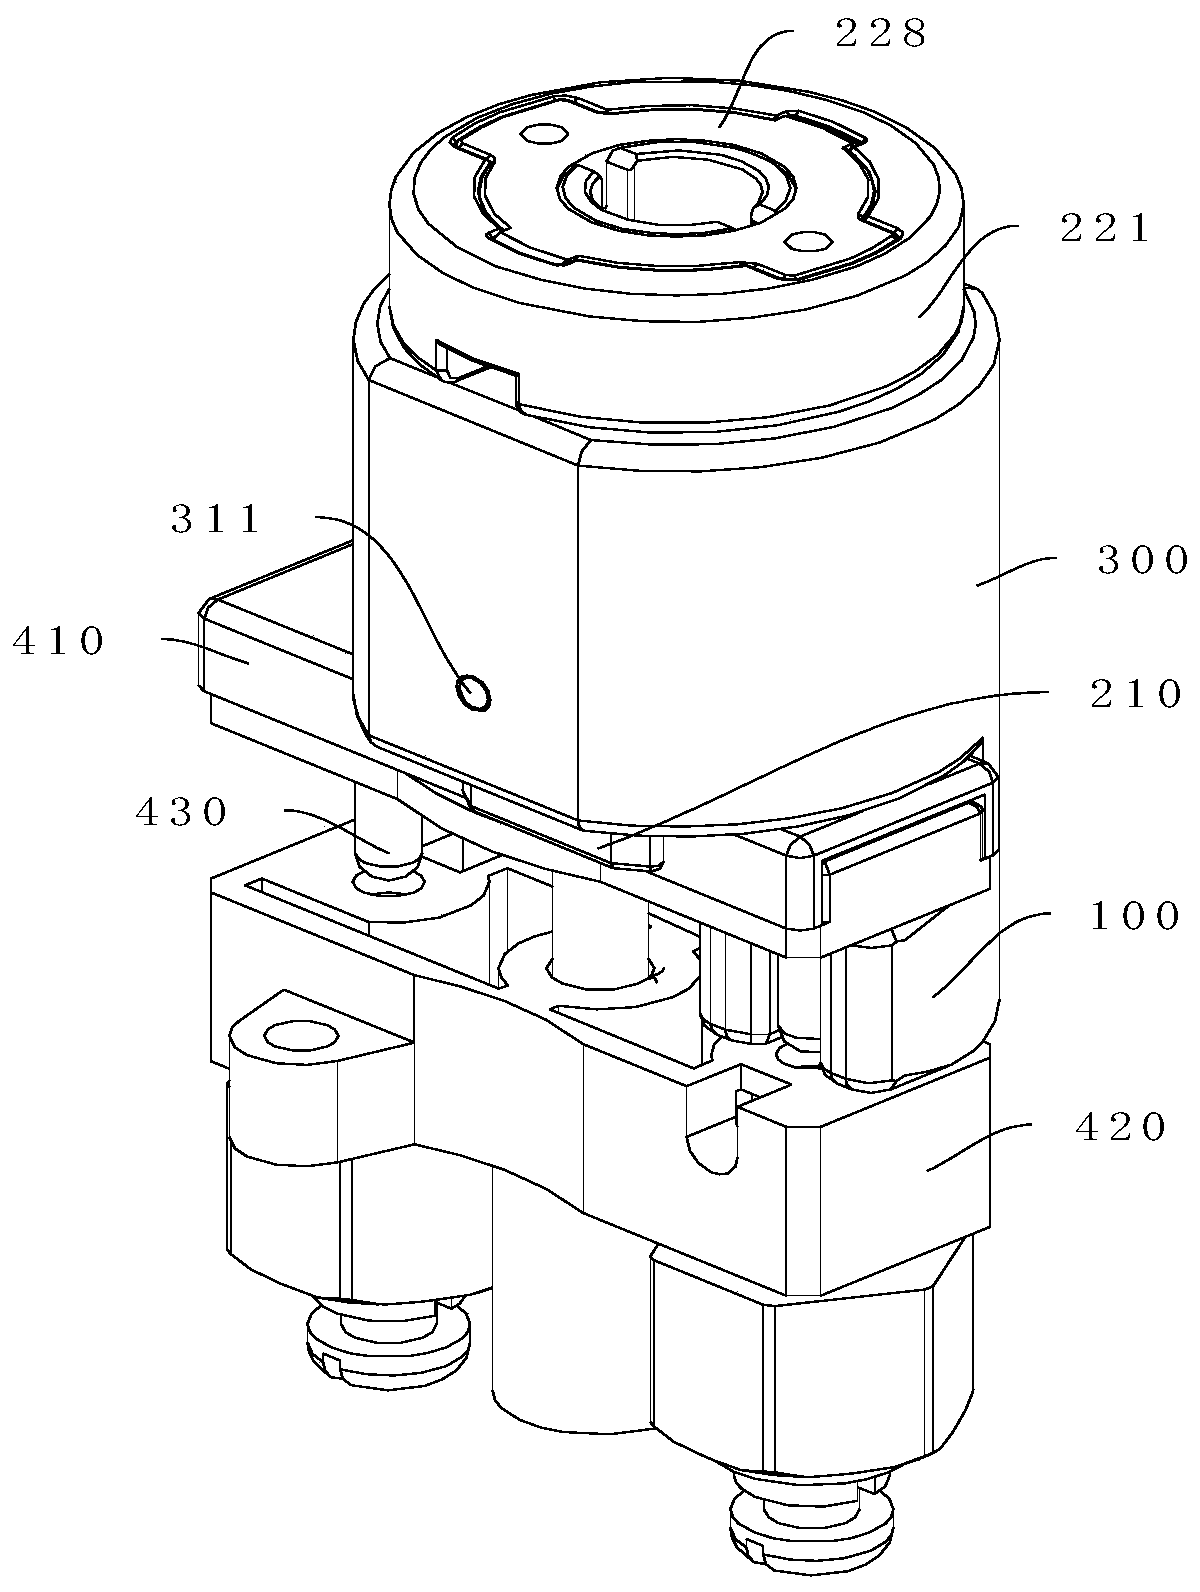 Pressure plate locking device